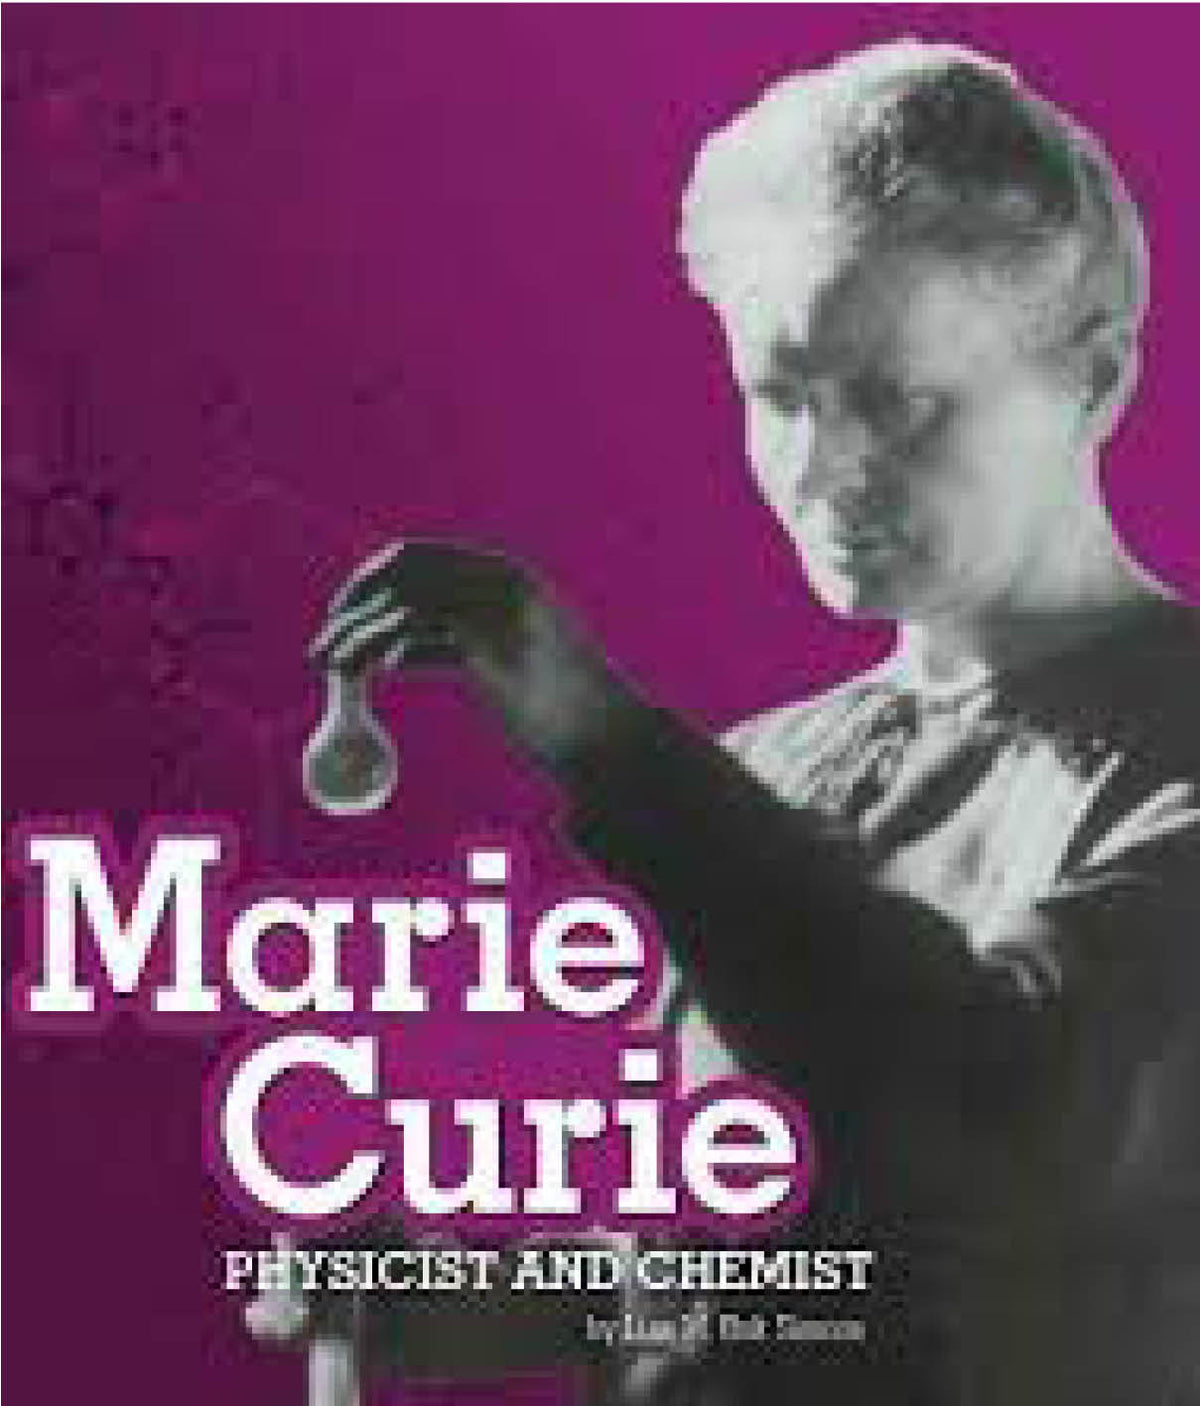 Marie Curie: Physicist and Chemist by Lisa M.Bolt Simons